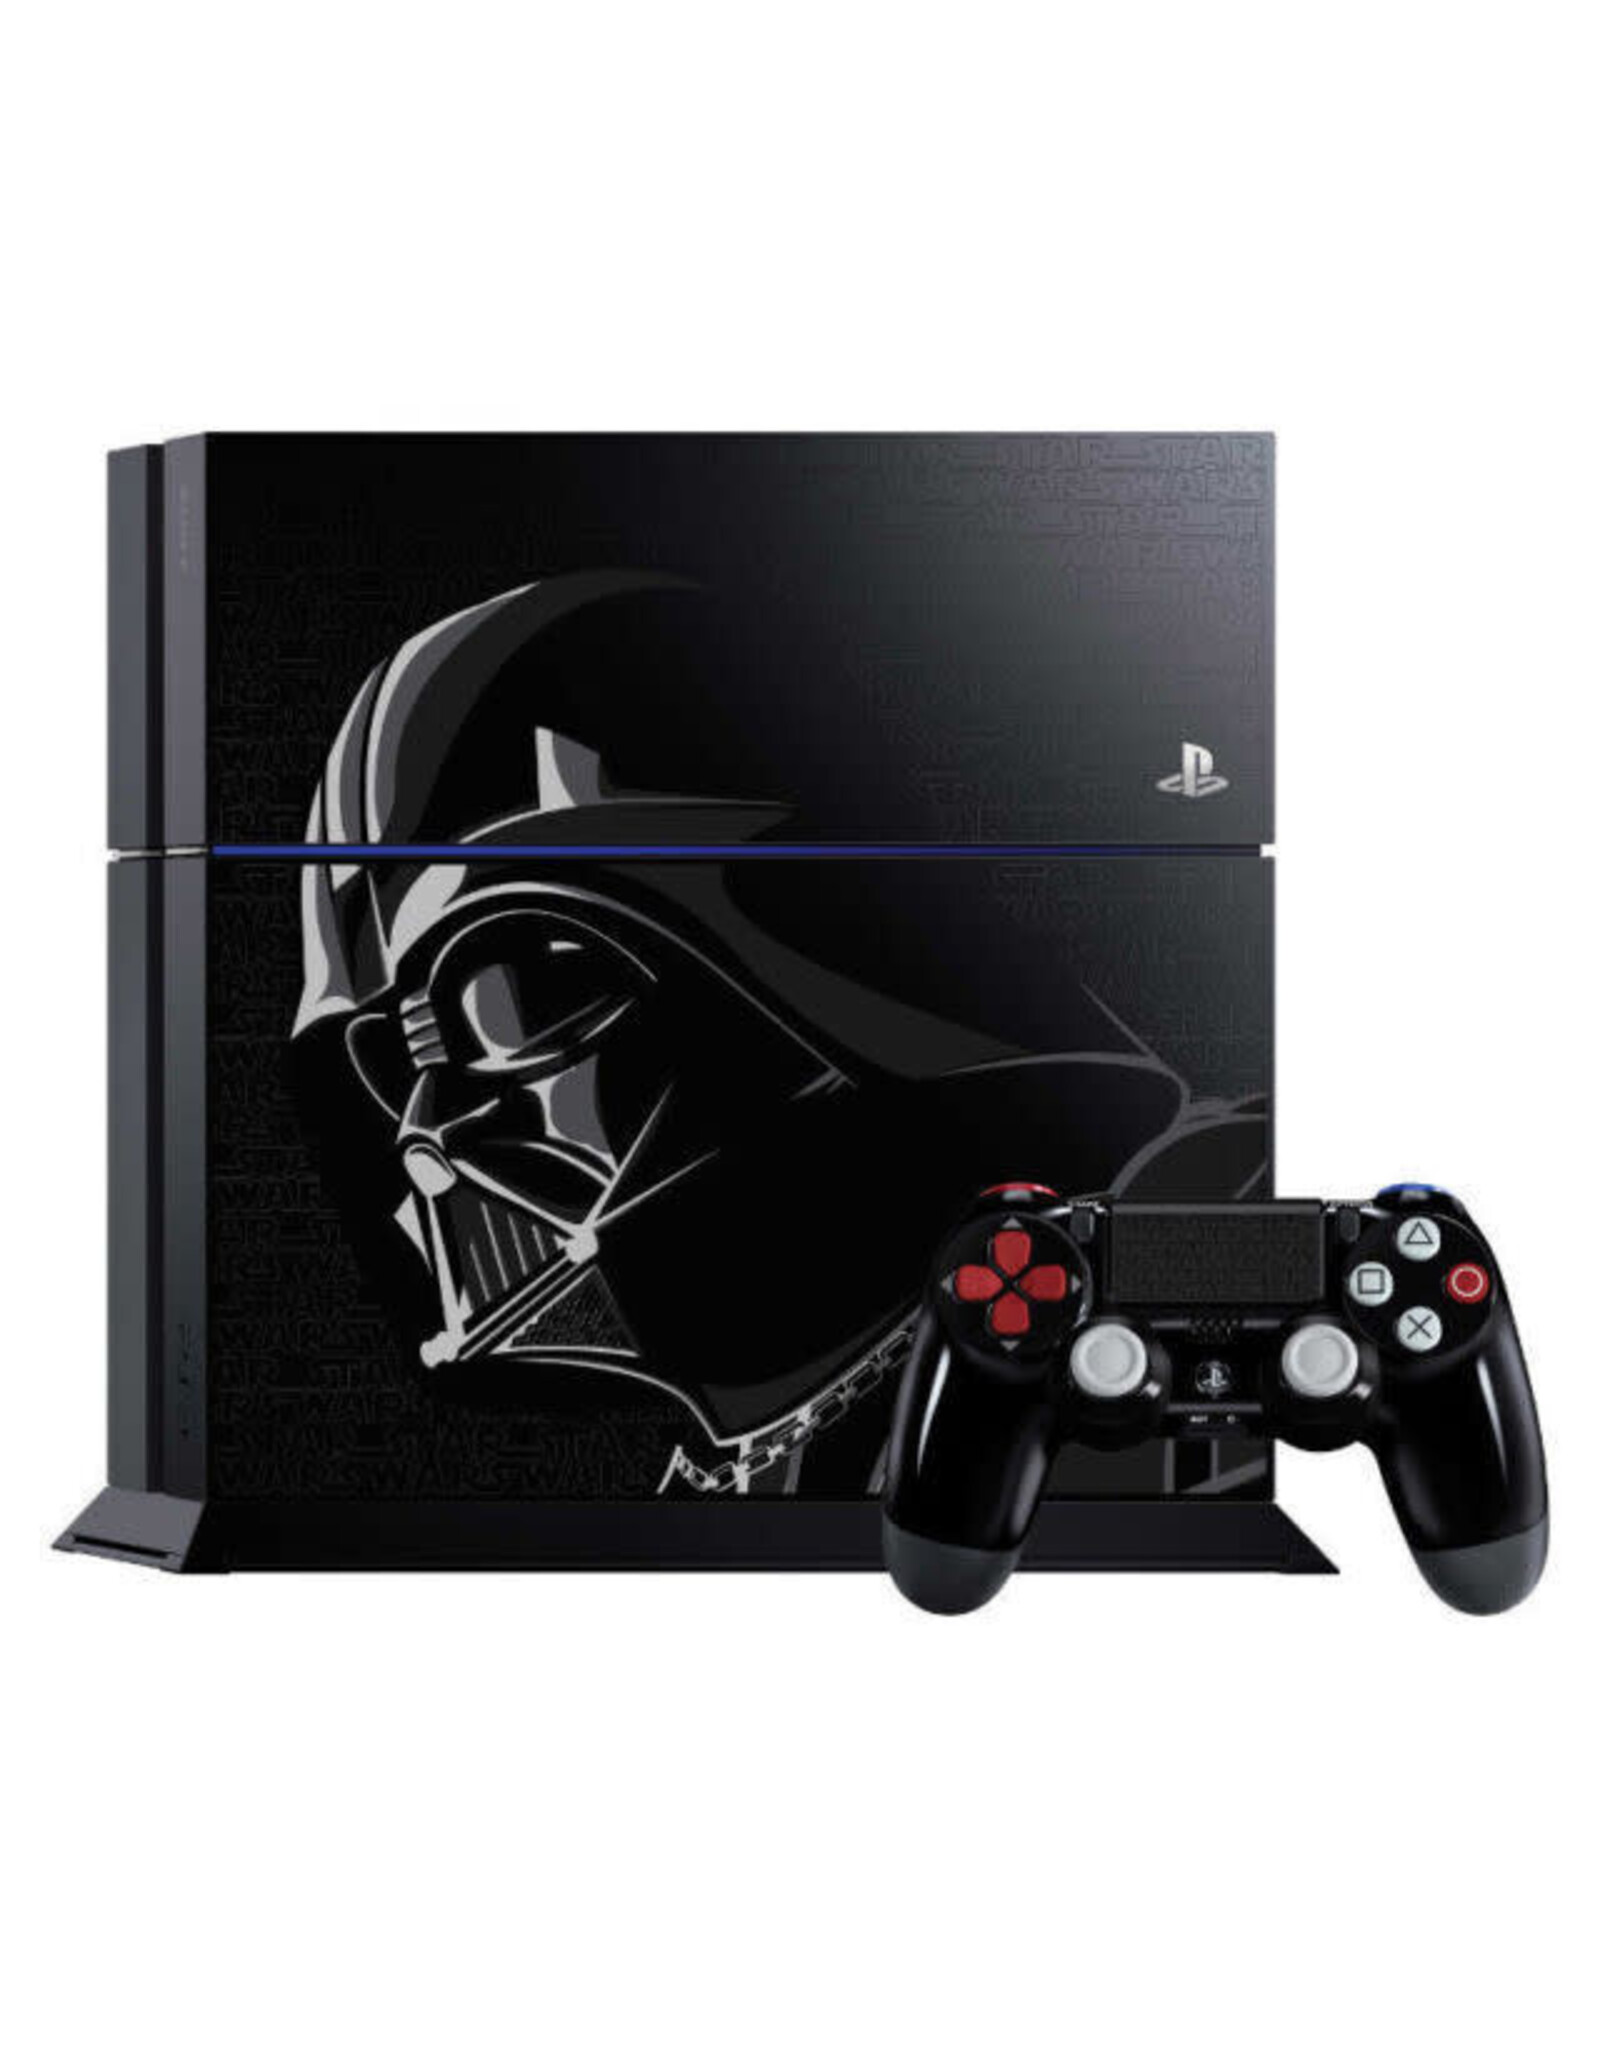 Playstation 4 Playstation 4 500GB Console - Star Wars Darth Vader Edition (Used, Cosmetic Damage)